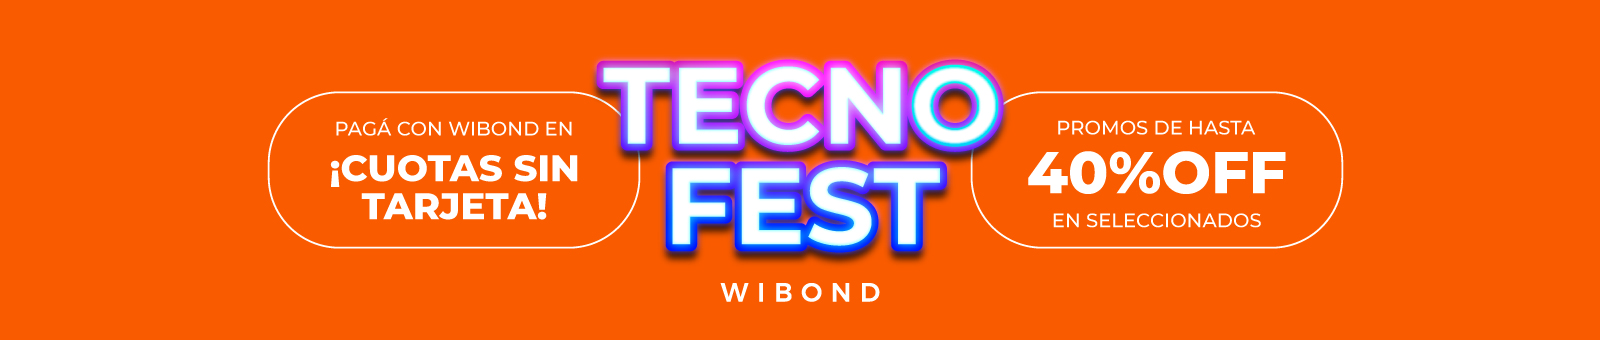 Tecnofest Wibond